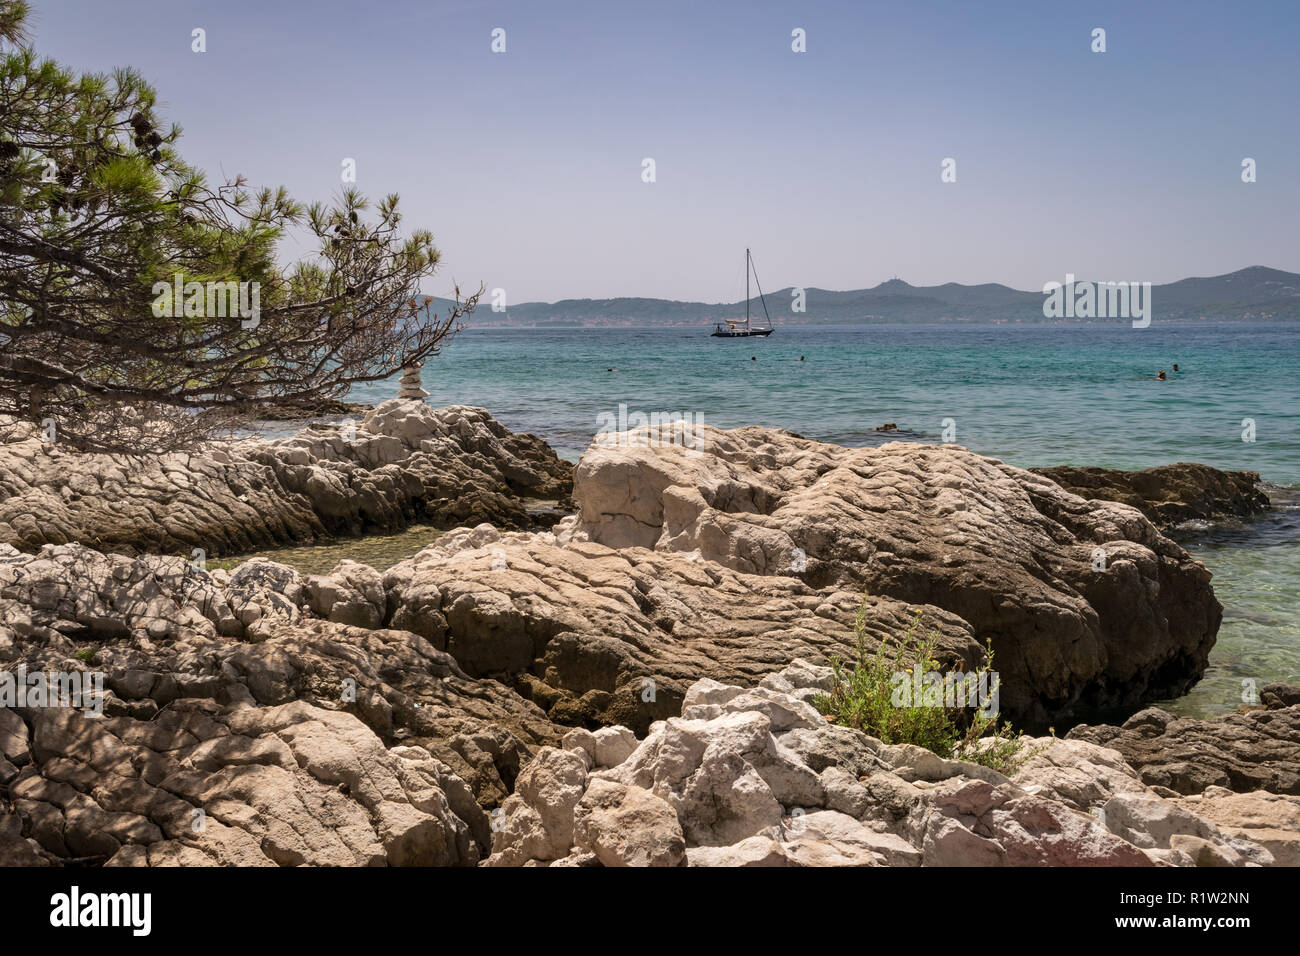 The dalmatian coast near Zadar, Croatia. The landscape, the beautiful blue calm sea and warm temperatures makes this a favorite area for vacations. Stock Photo